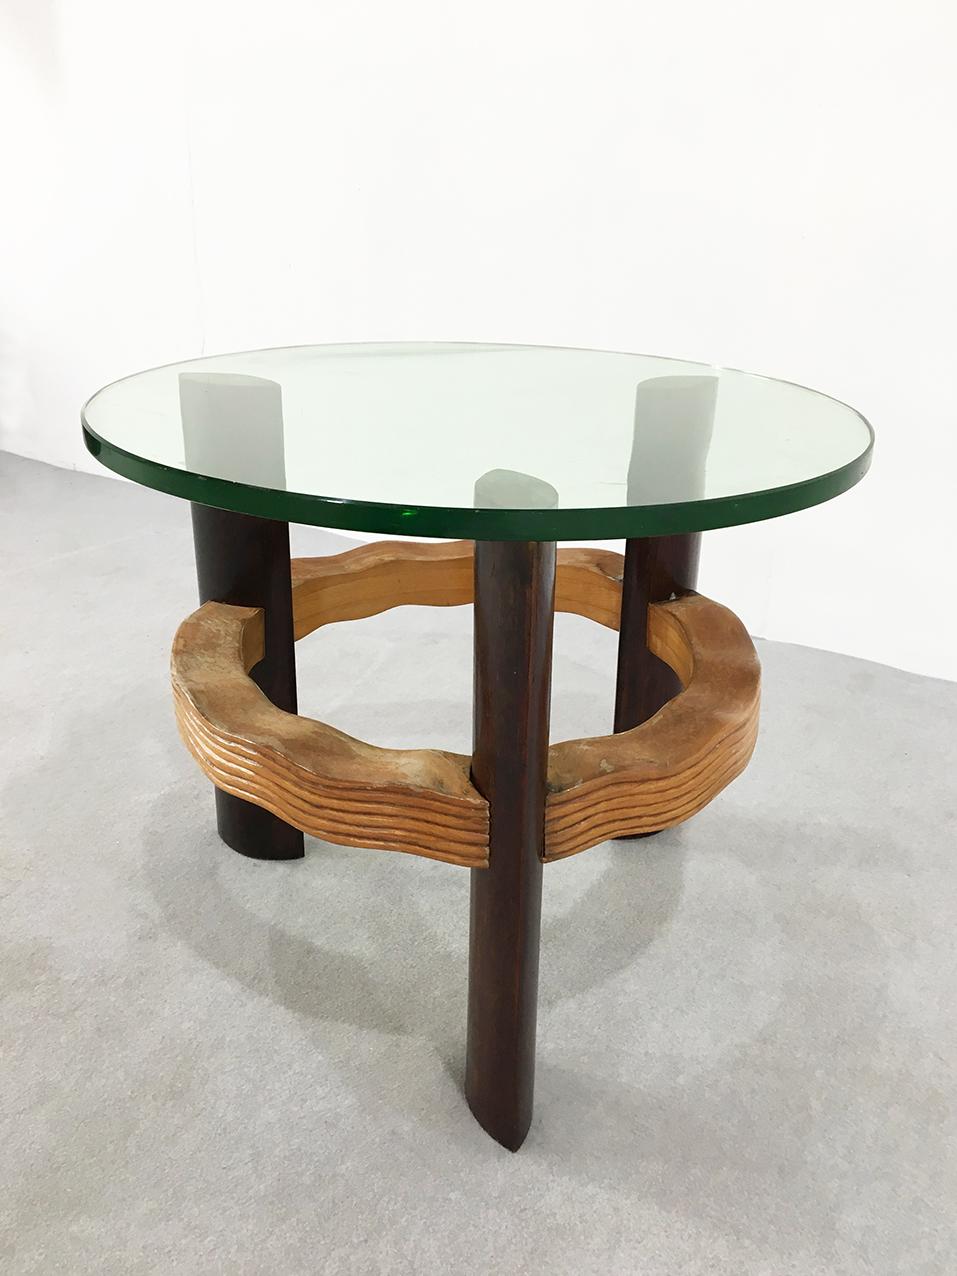 Mid-Century Modern Coffee Table Midcentury by Osvaldo Borsani in Ebony and Crystal Glass, 1950s